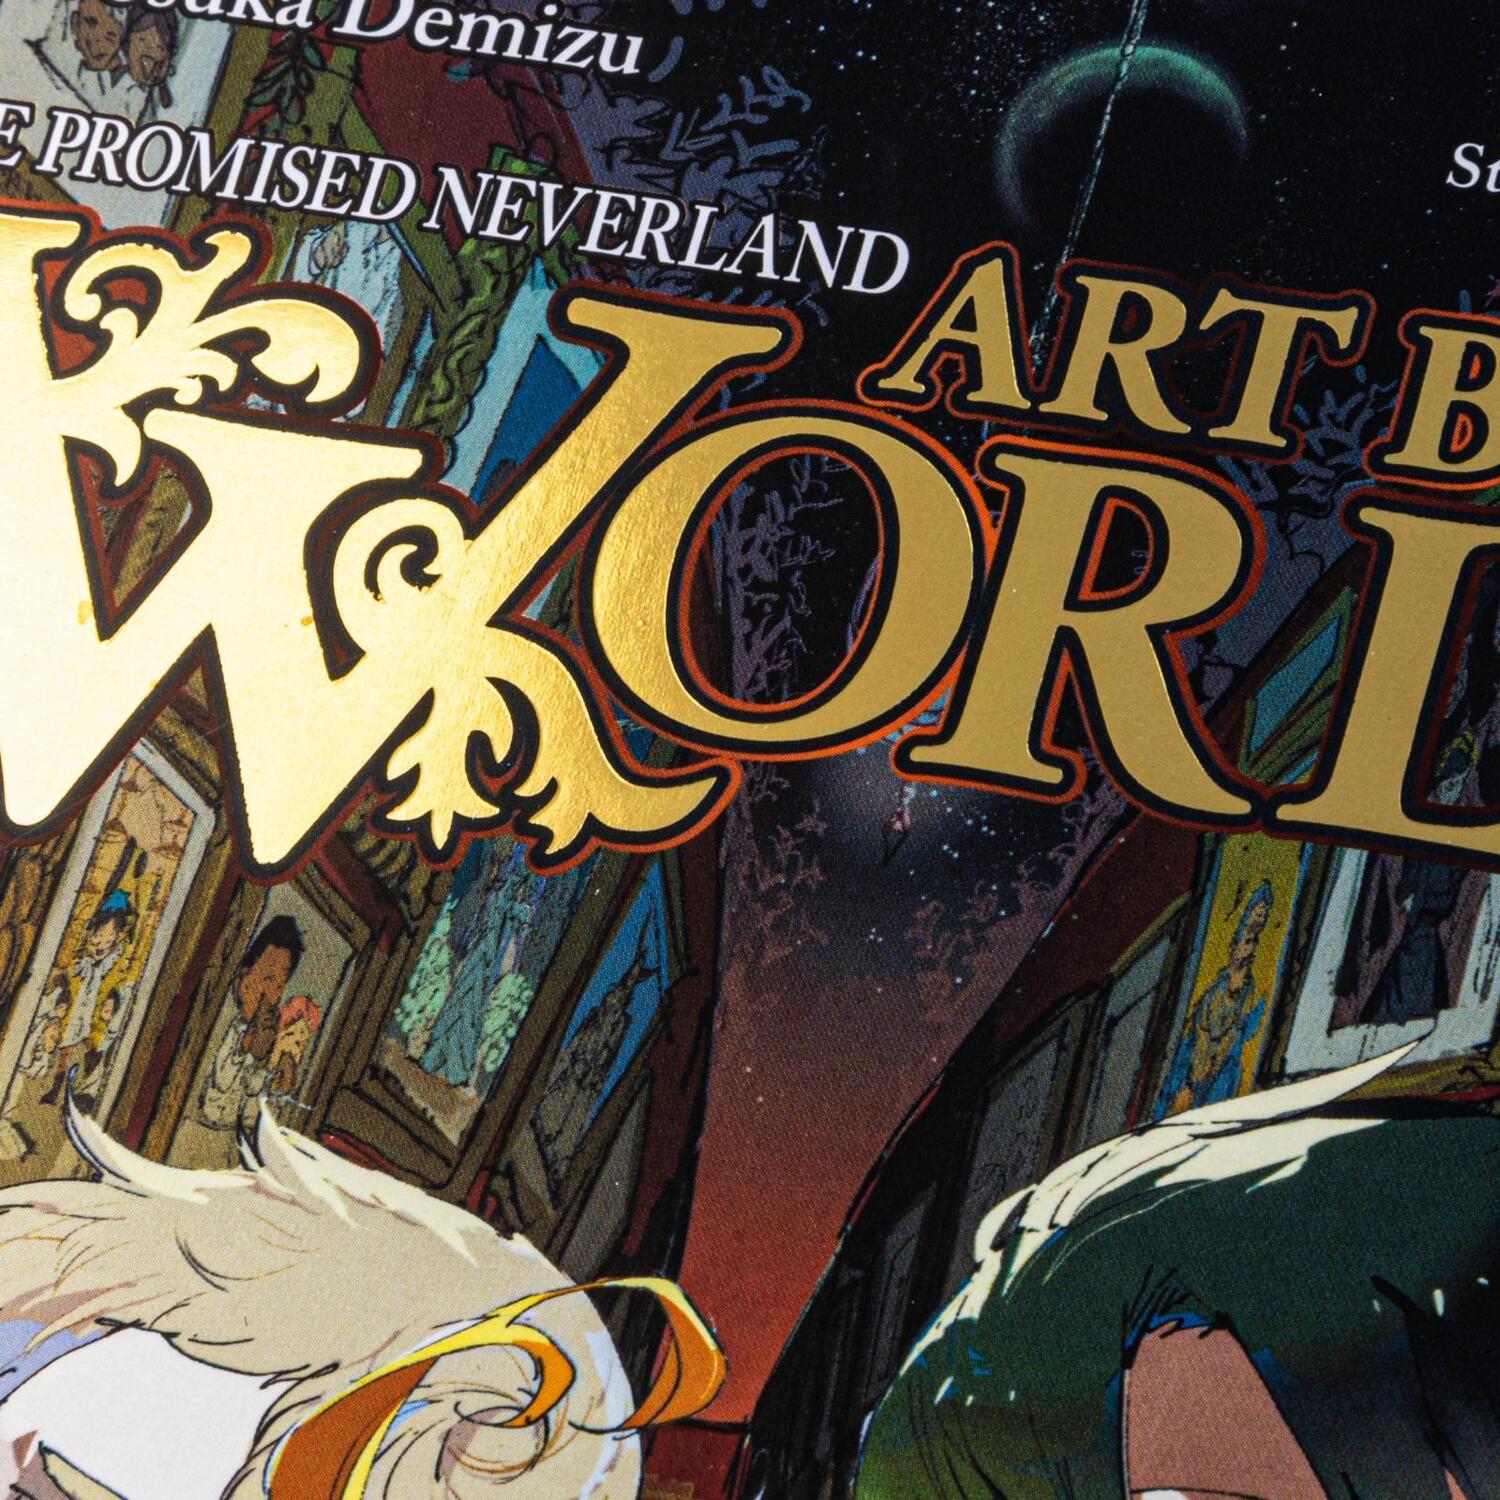 Bild: 9783551753670 | The Promised Neverland - Art Book World | Kaiu Shirai (u. a.) | Buch